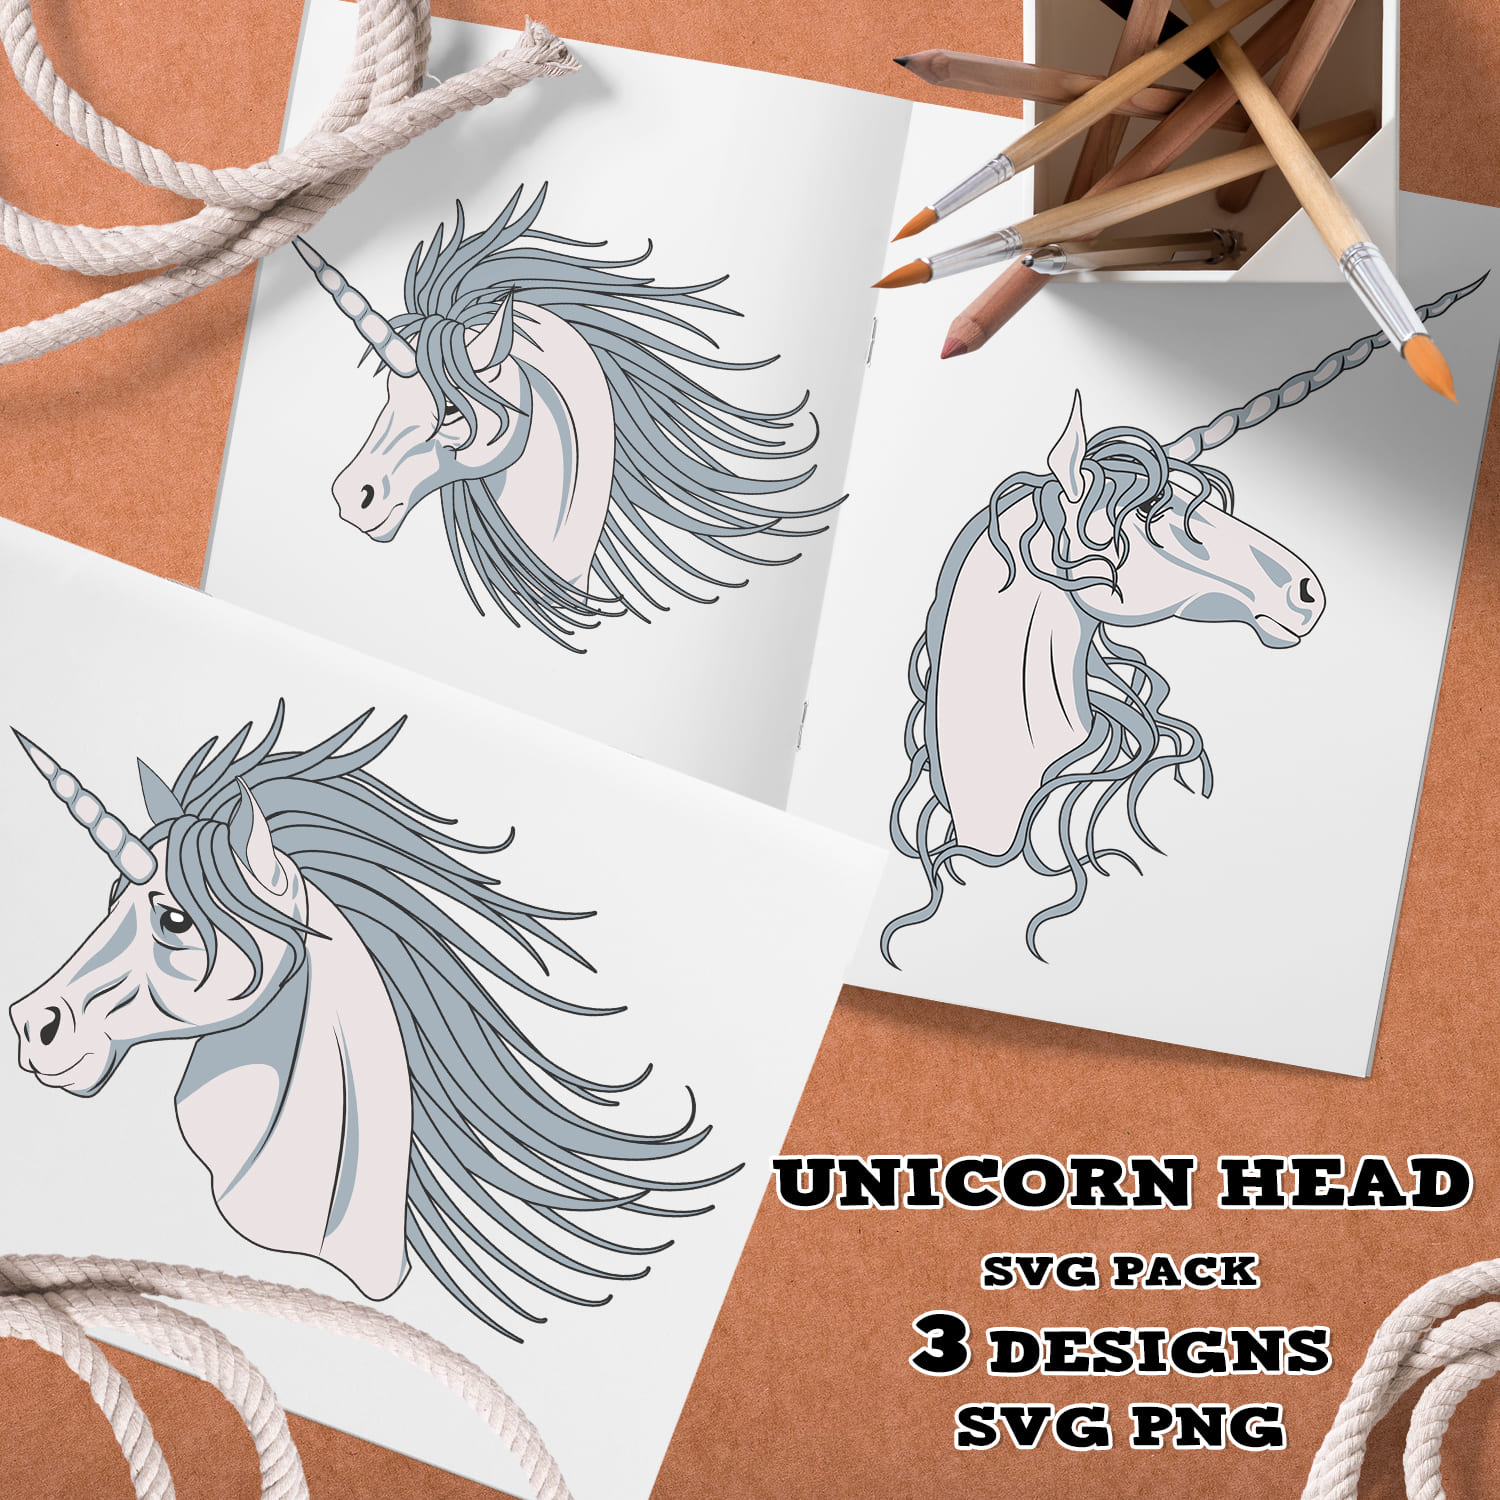 Unicorn Head SVG - main image preview.